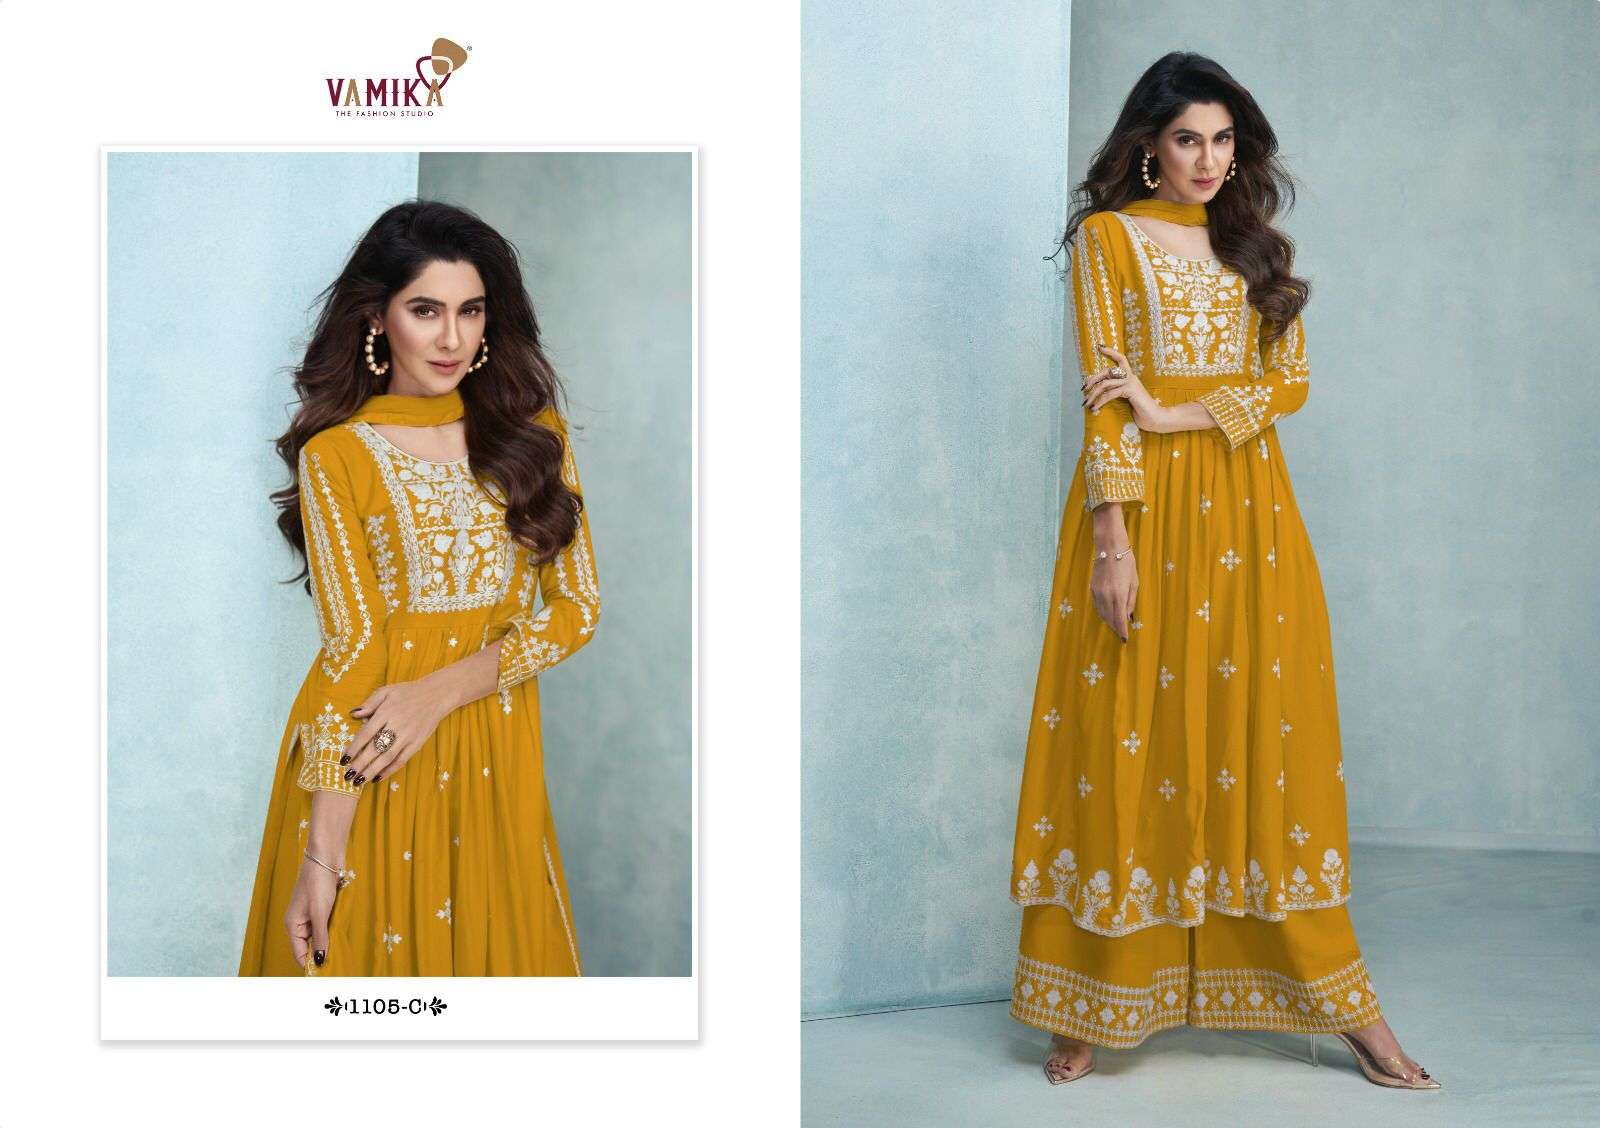 vamika aadhira vol-3 1108 series exclusive designer party wear kurtis catalogue wholesale price surat 